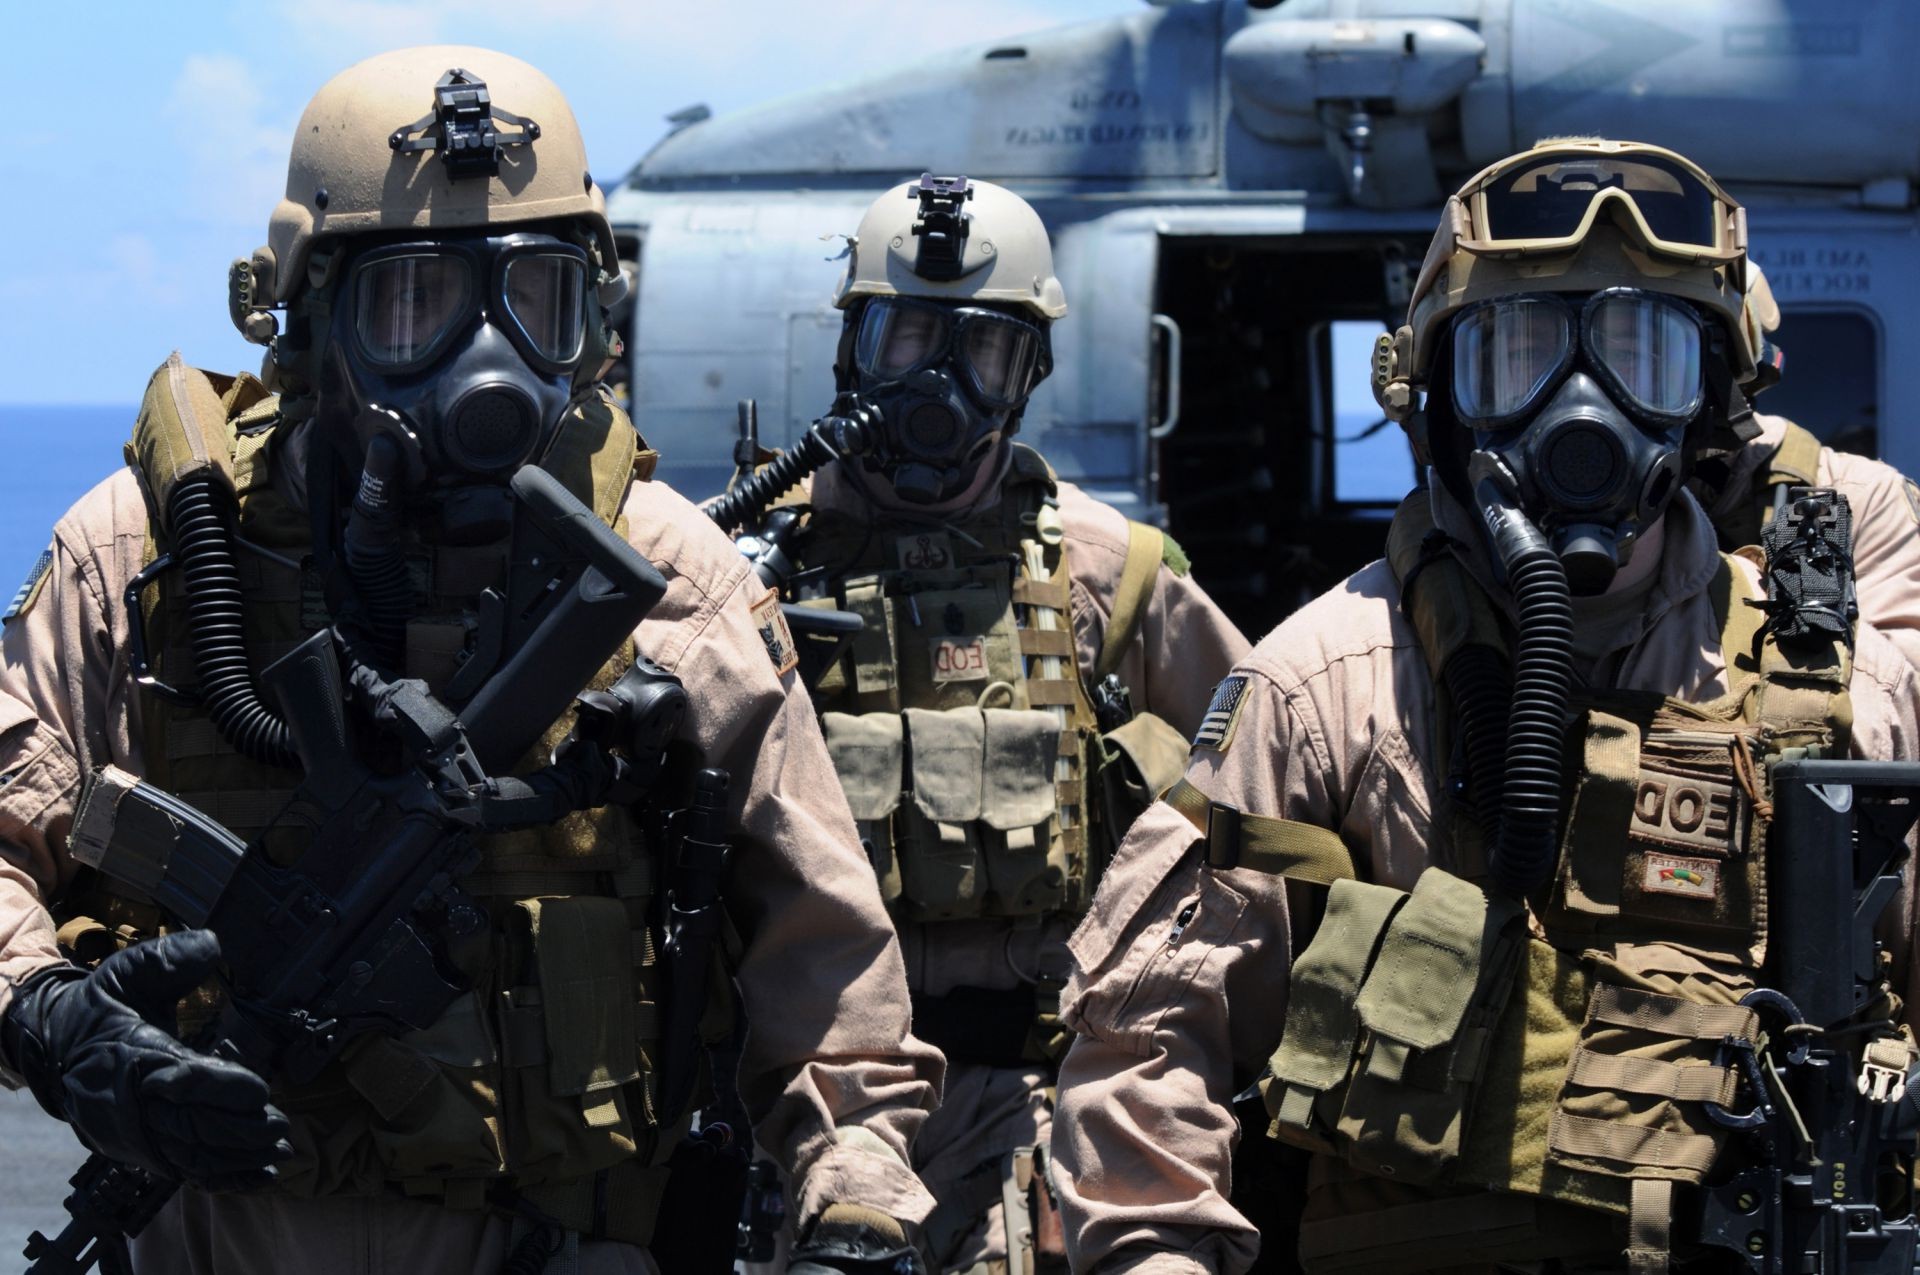 swat military war army weapon vehicle soldier man battle armor group navy helmet